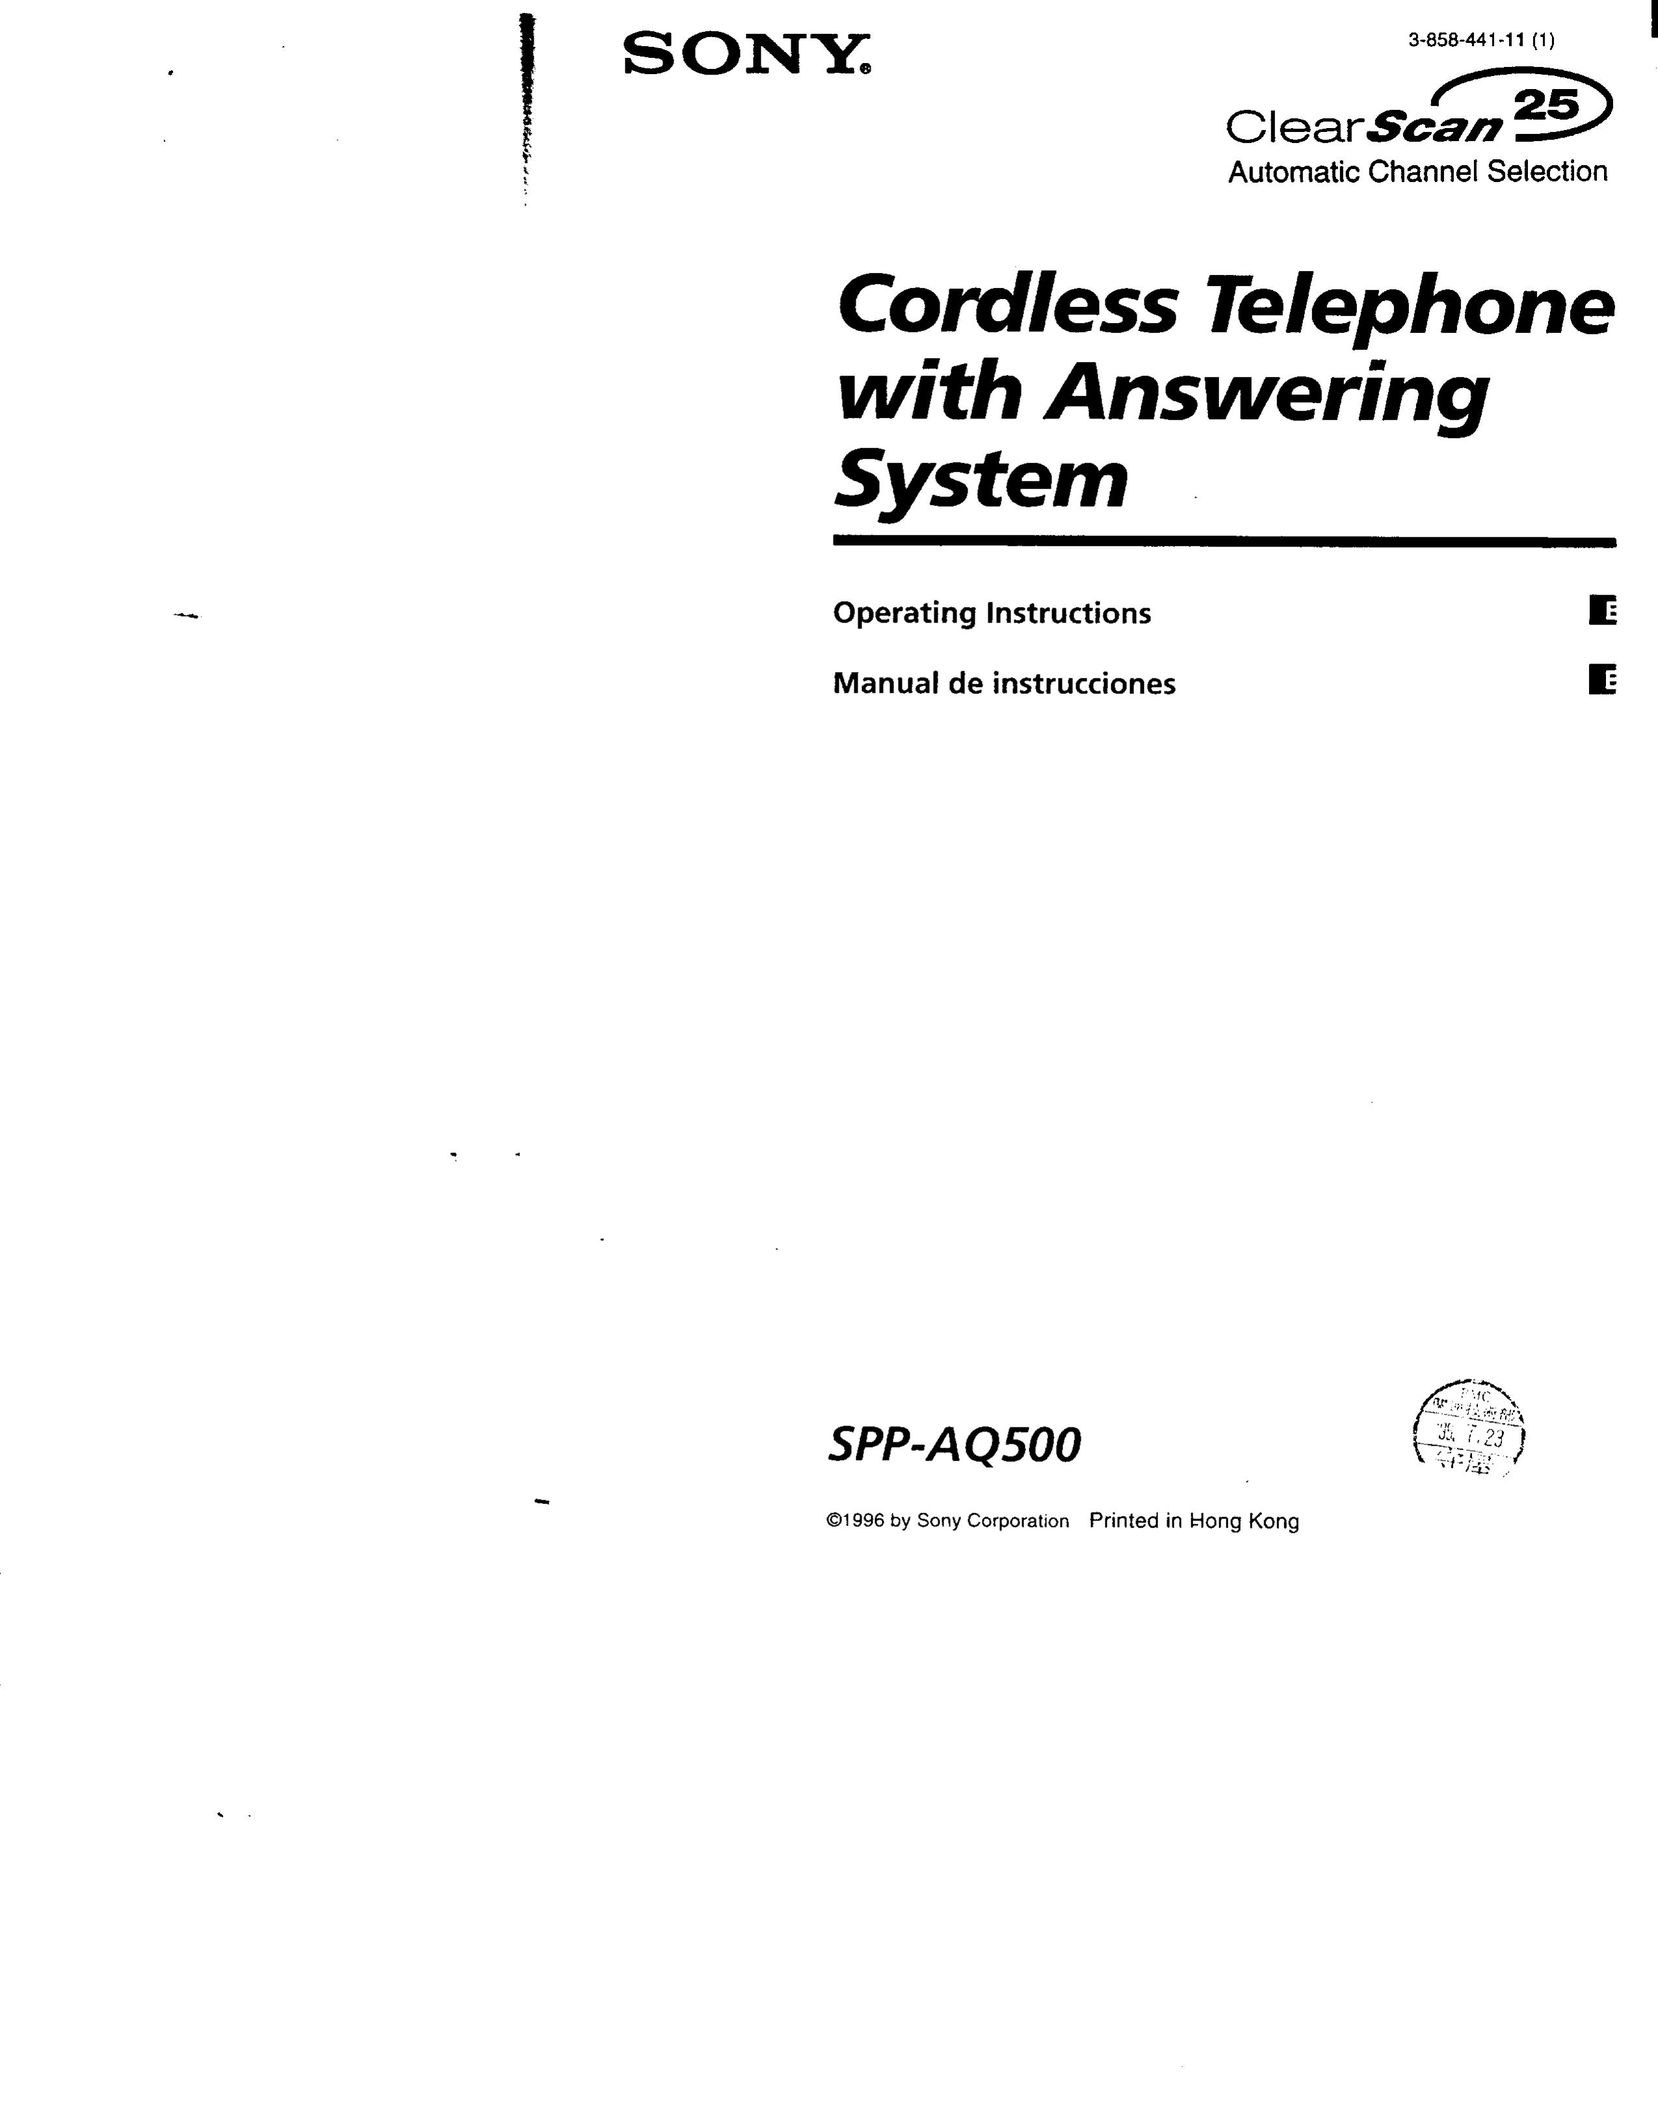 Sony SPP-AQ500 Cordless Telephone User Manual